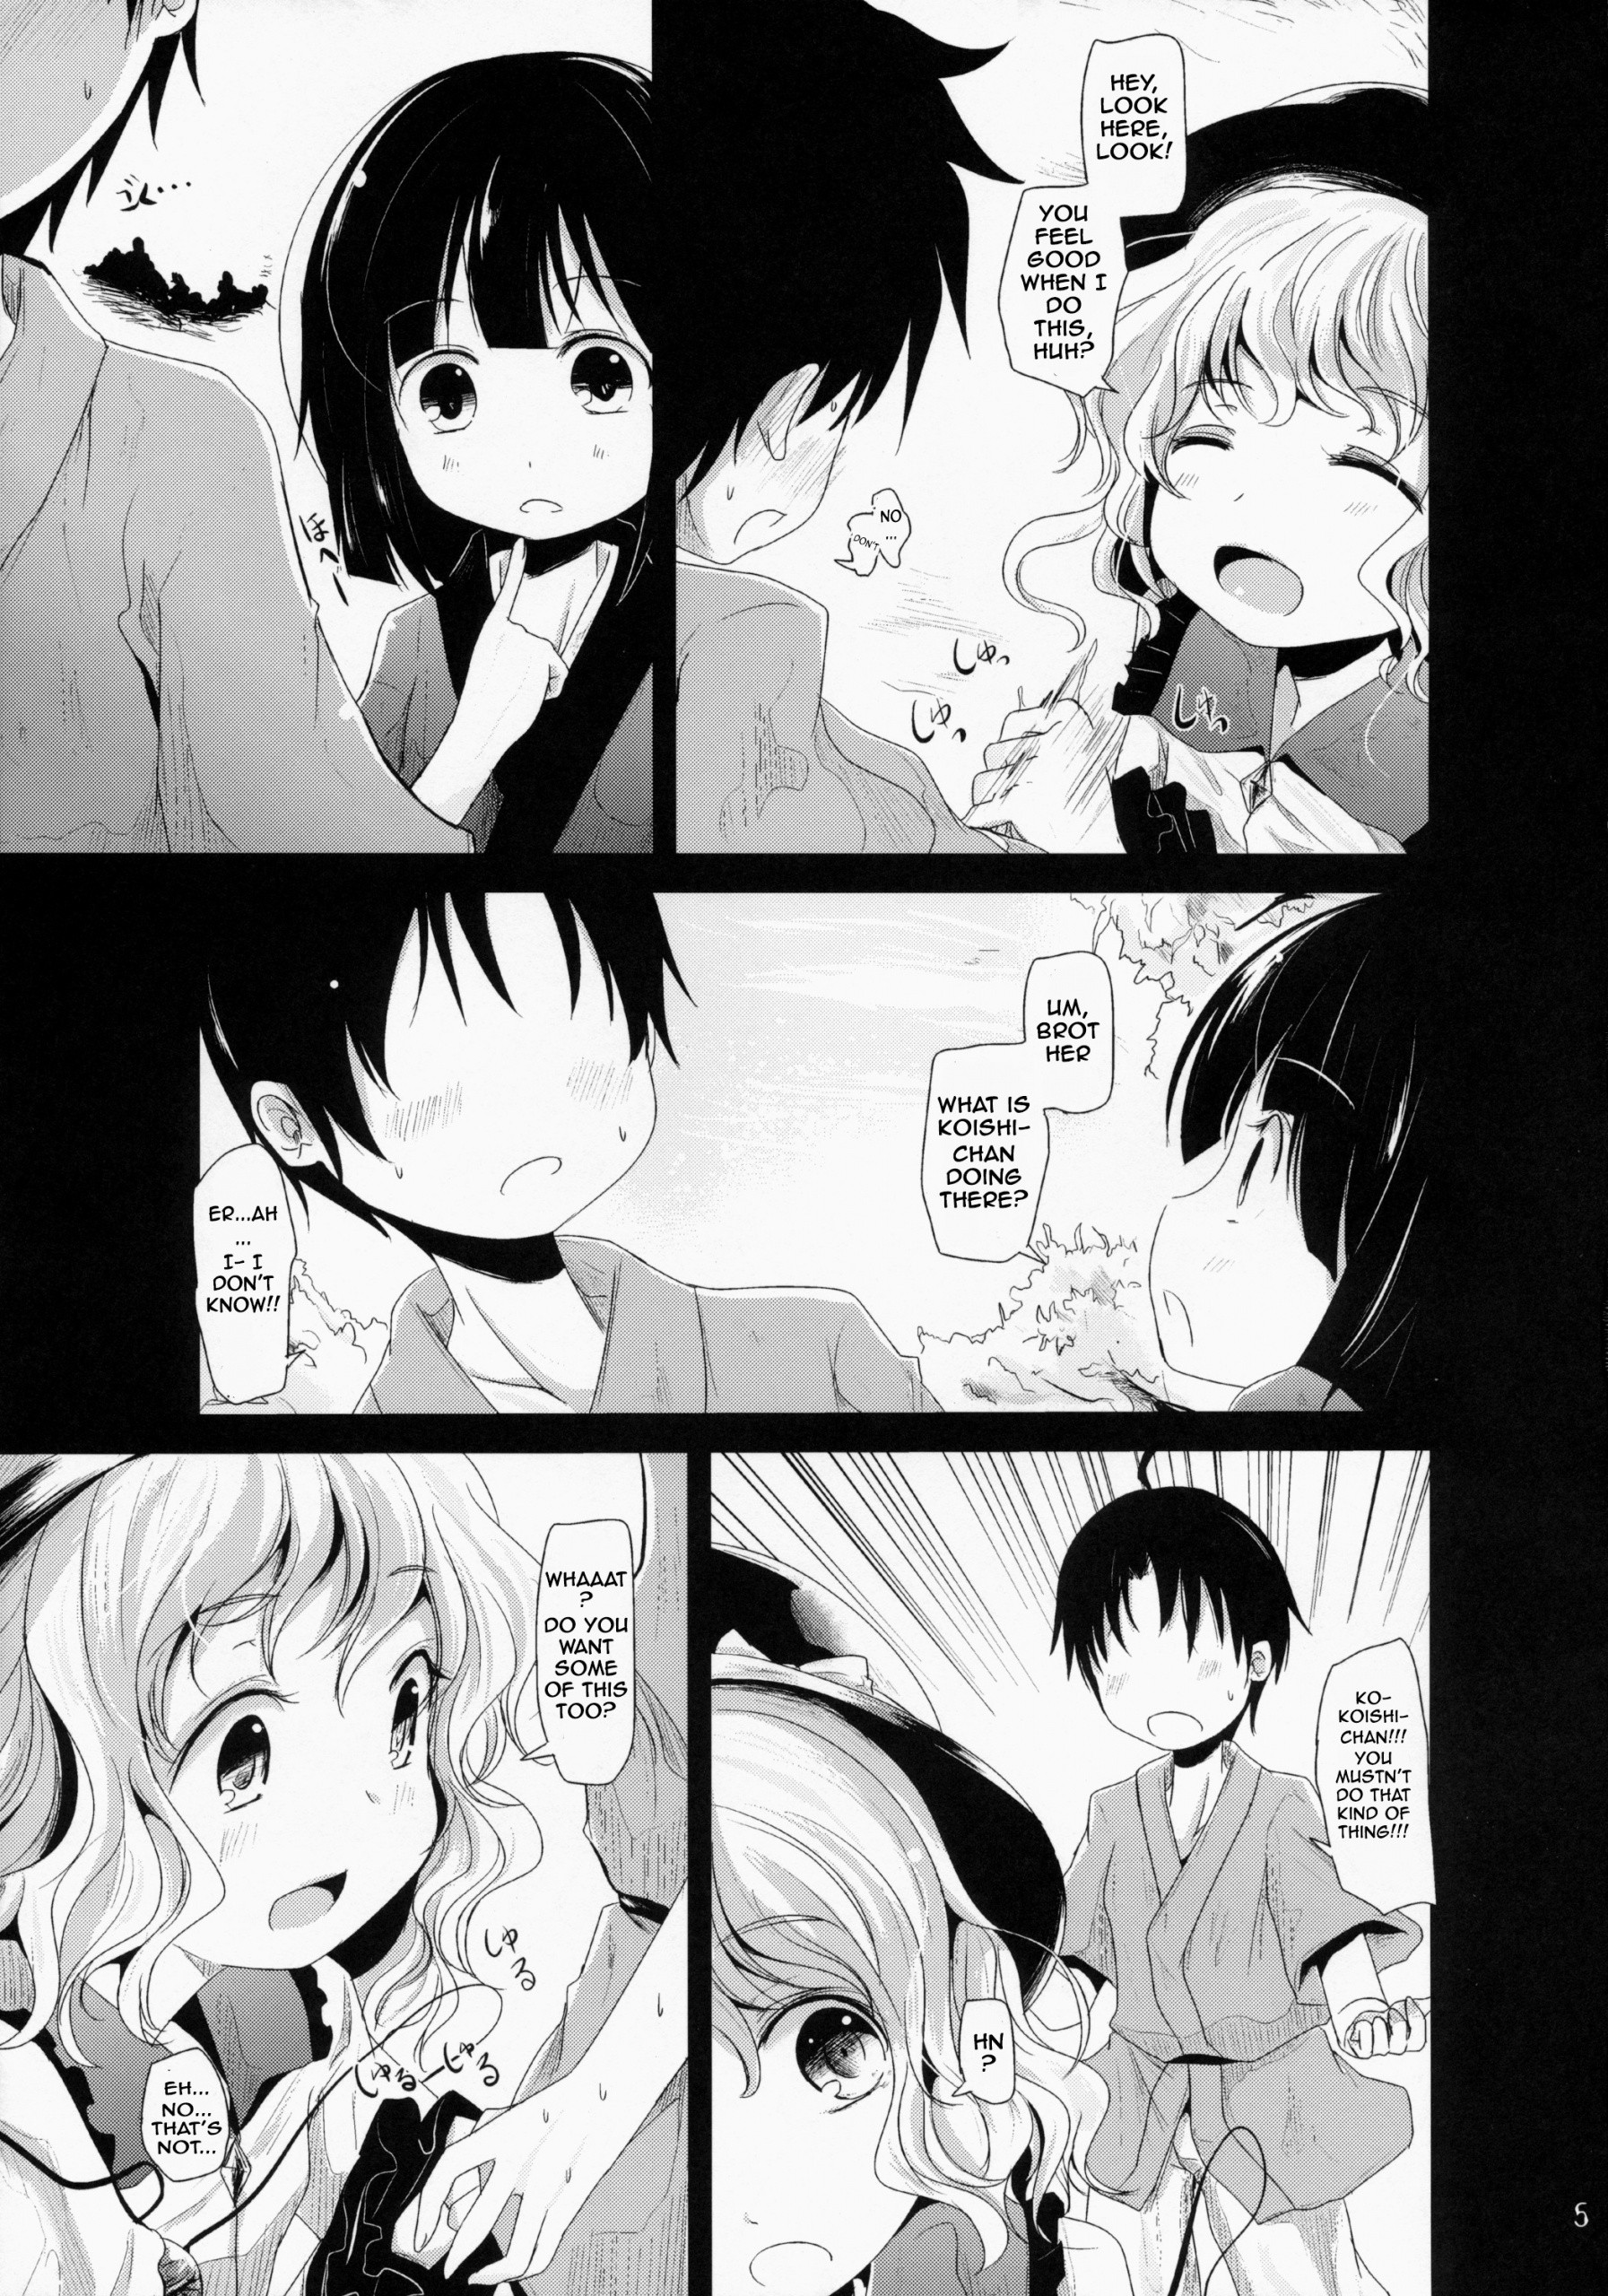 Koishi-Chan Let's Play hentai manga picture 4